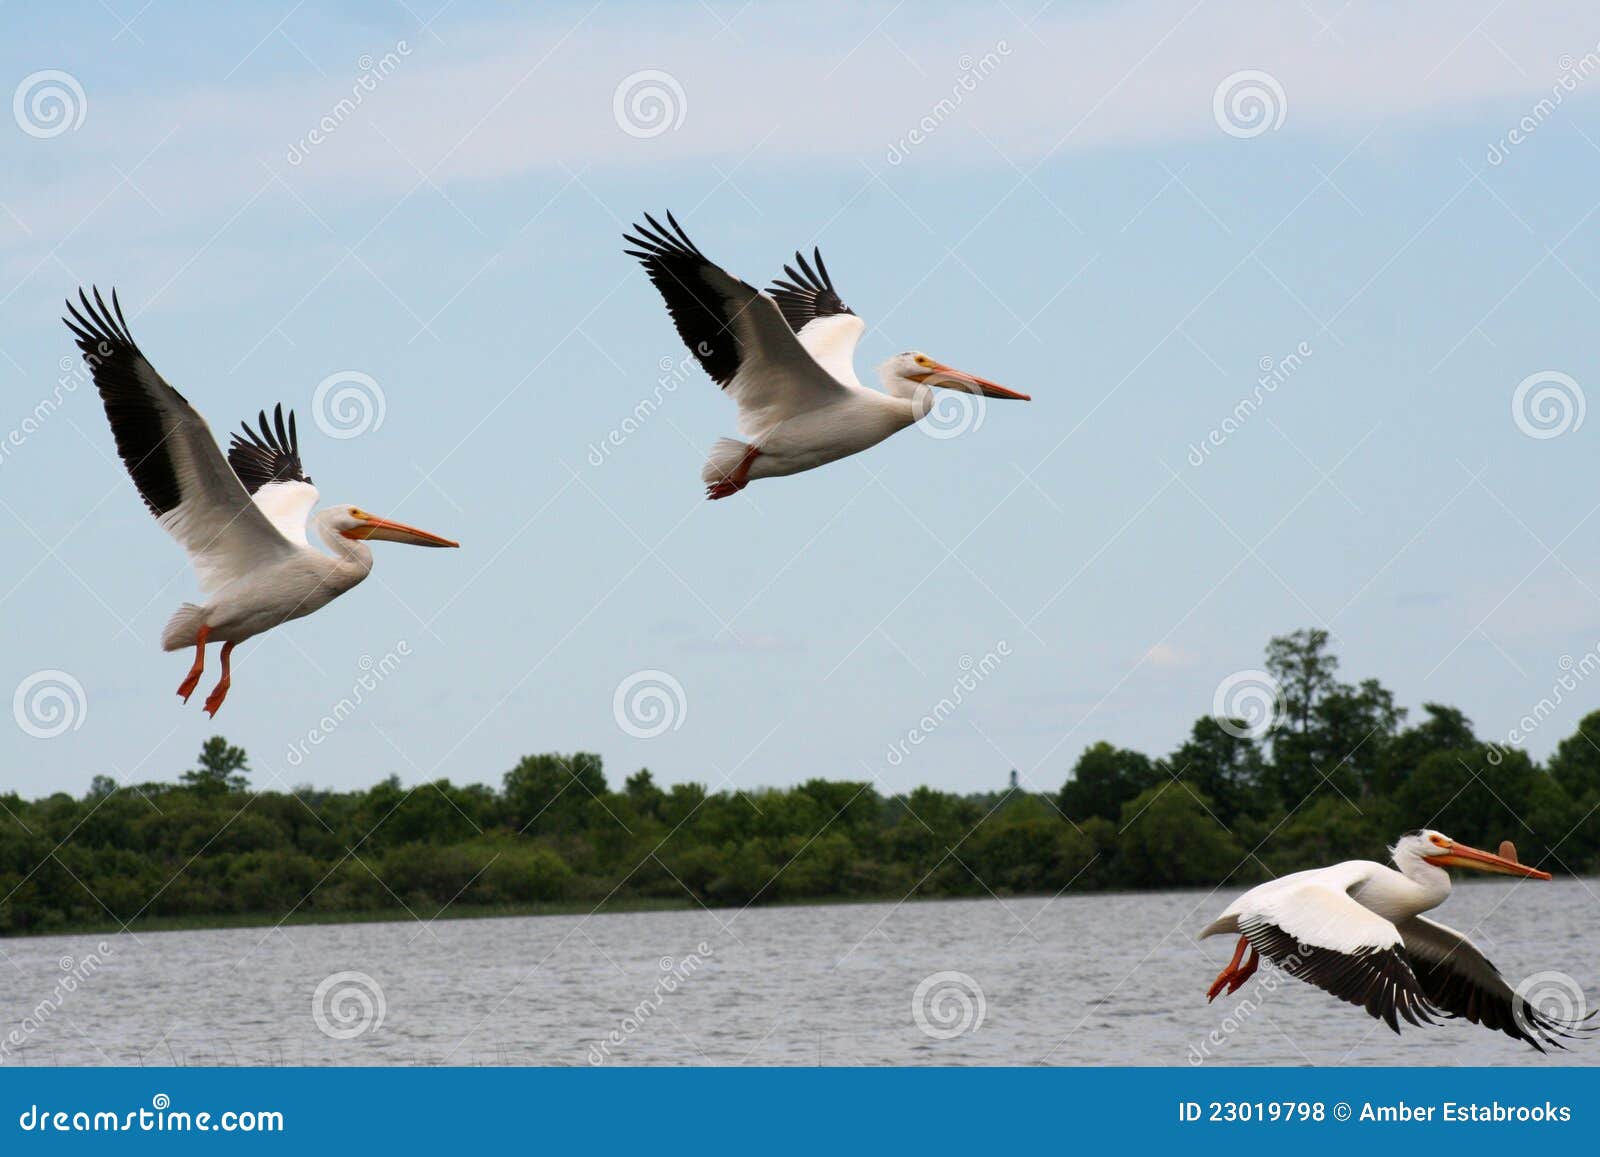 american white pelicans in flight